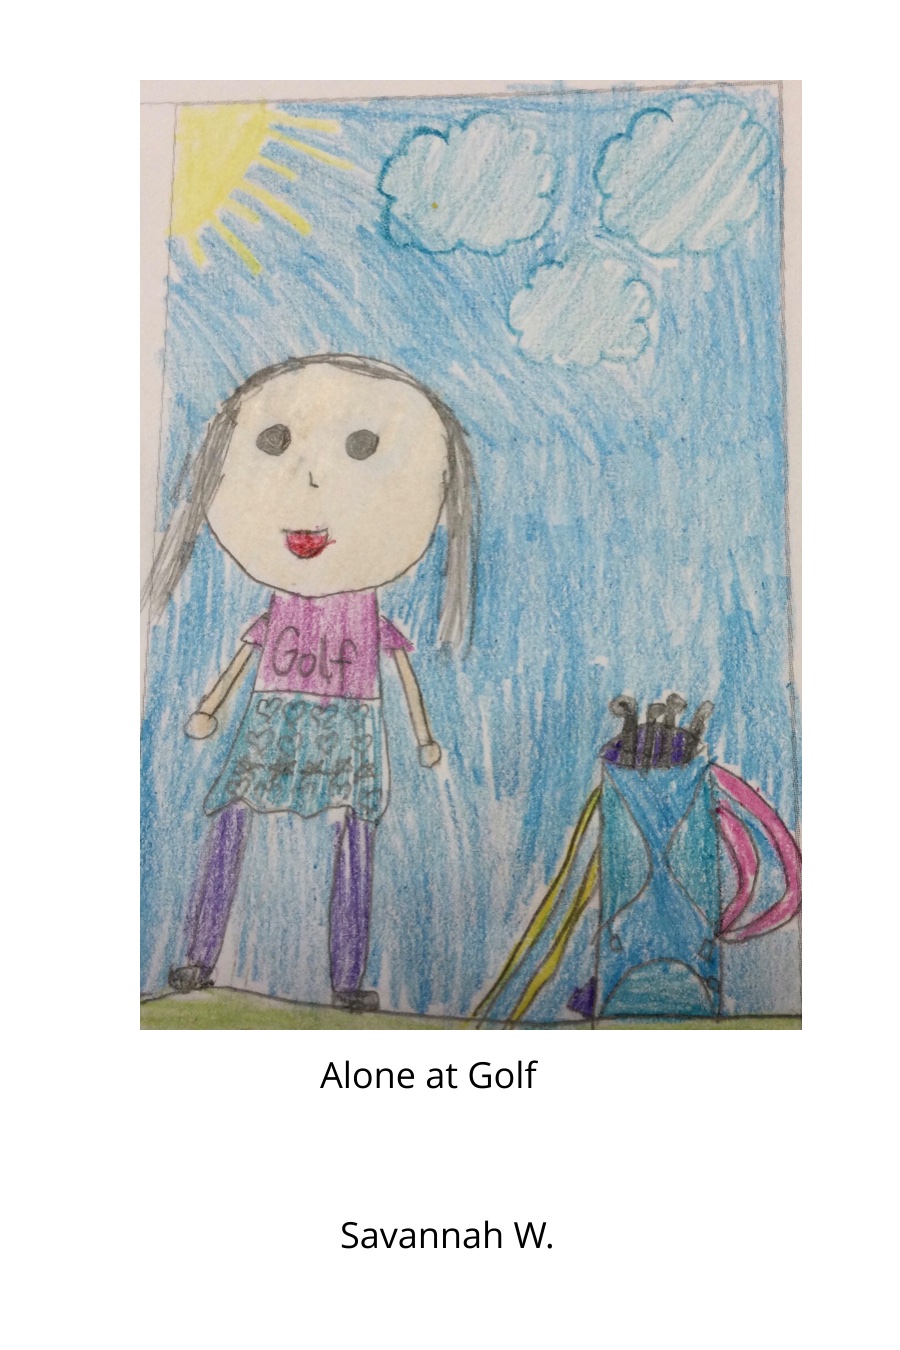 Alone at Golf by Savannah W